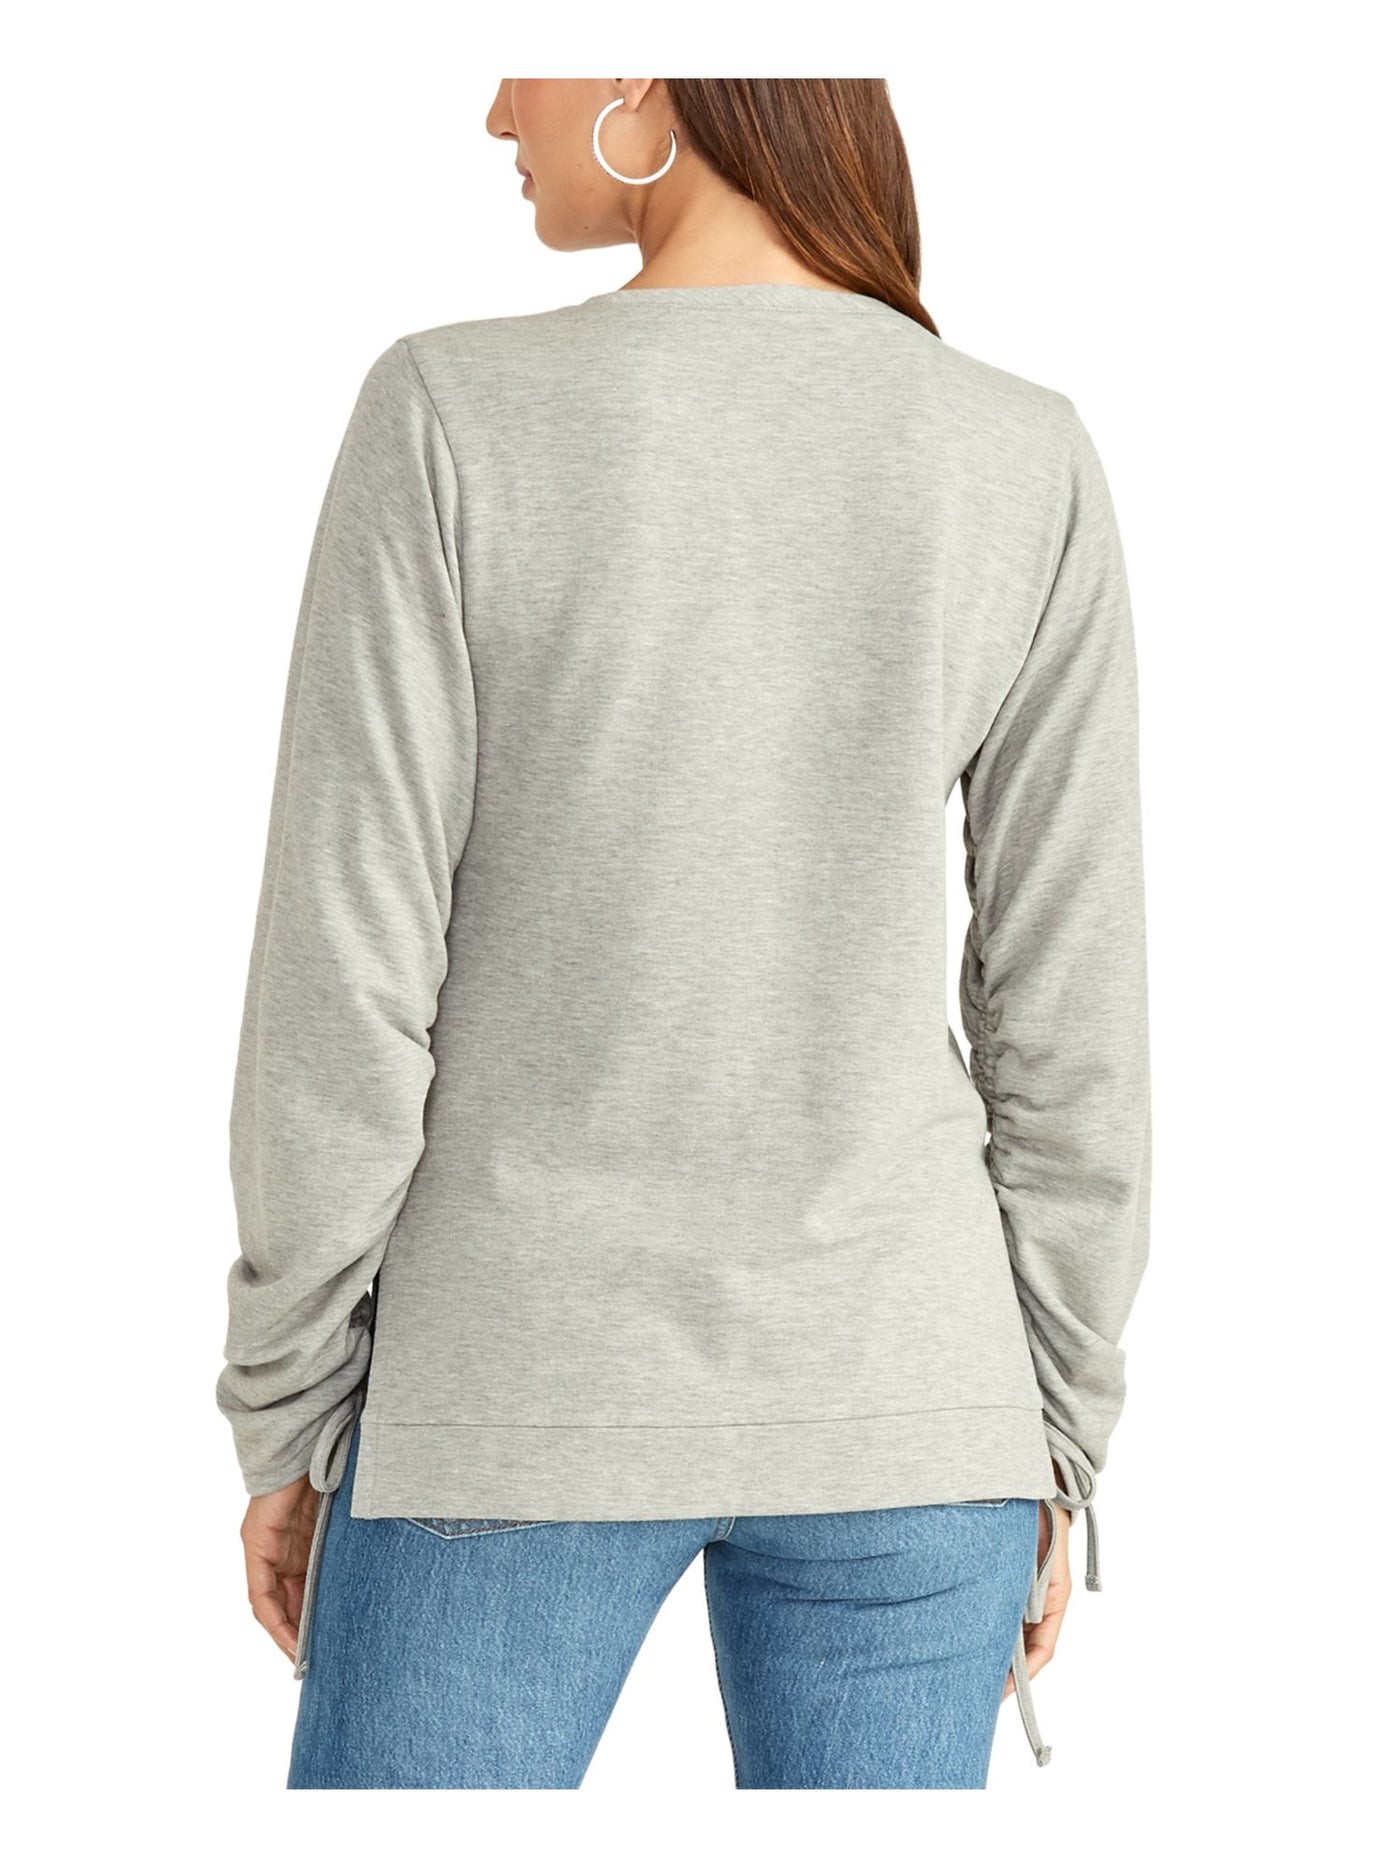 RACHEL RACHEL ROY Womens Gray Ruched Long Sleeve Jewel Neck Sweater XXL